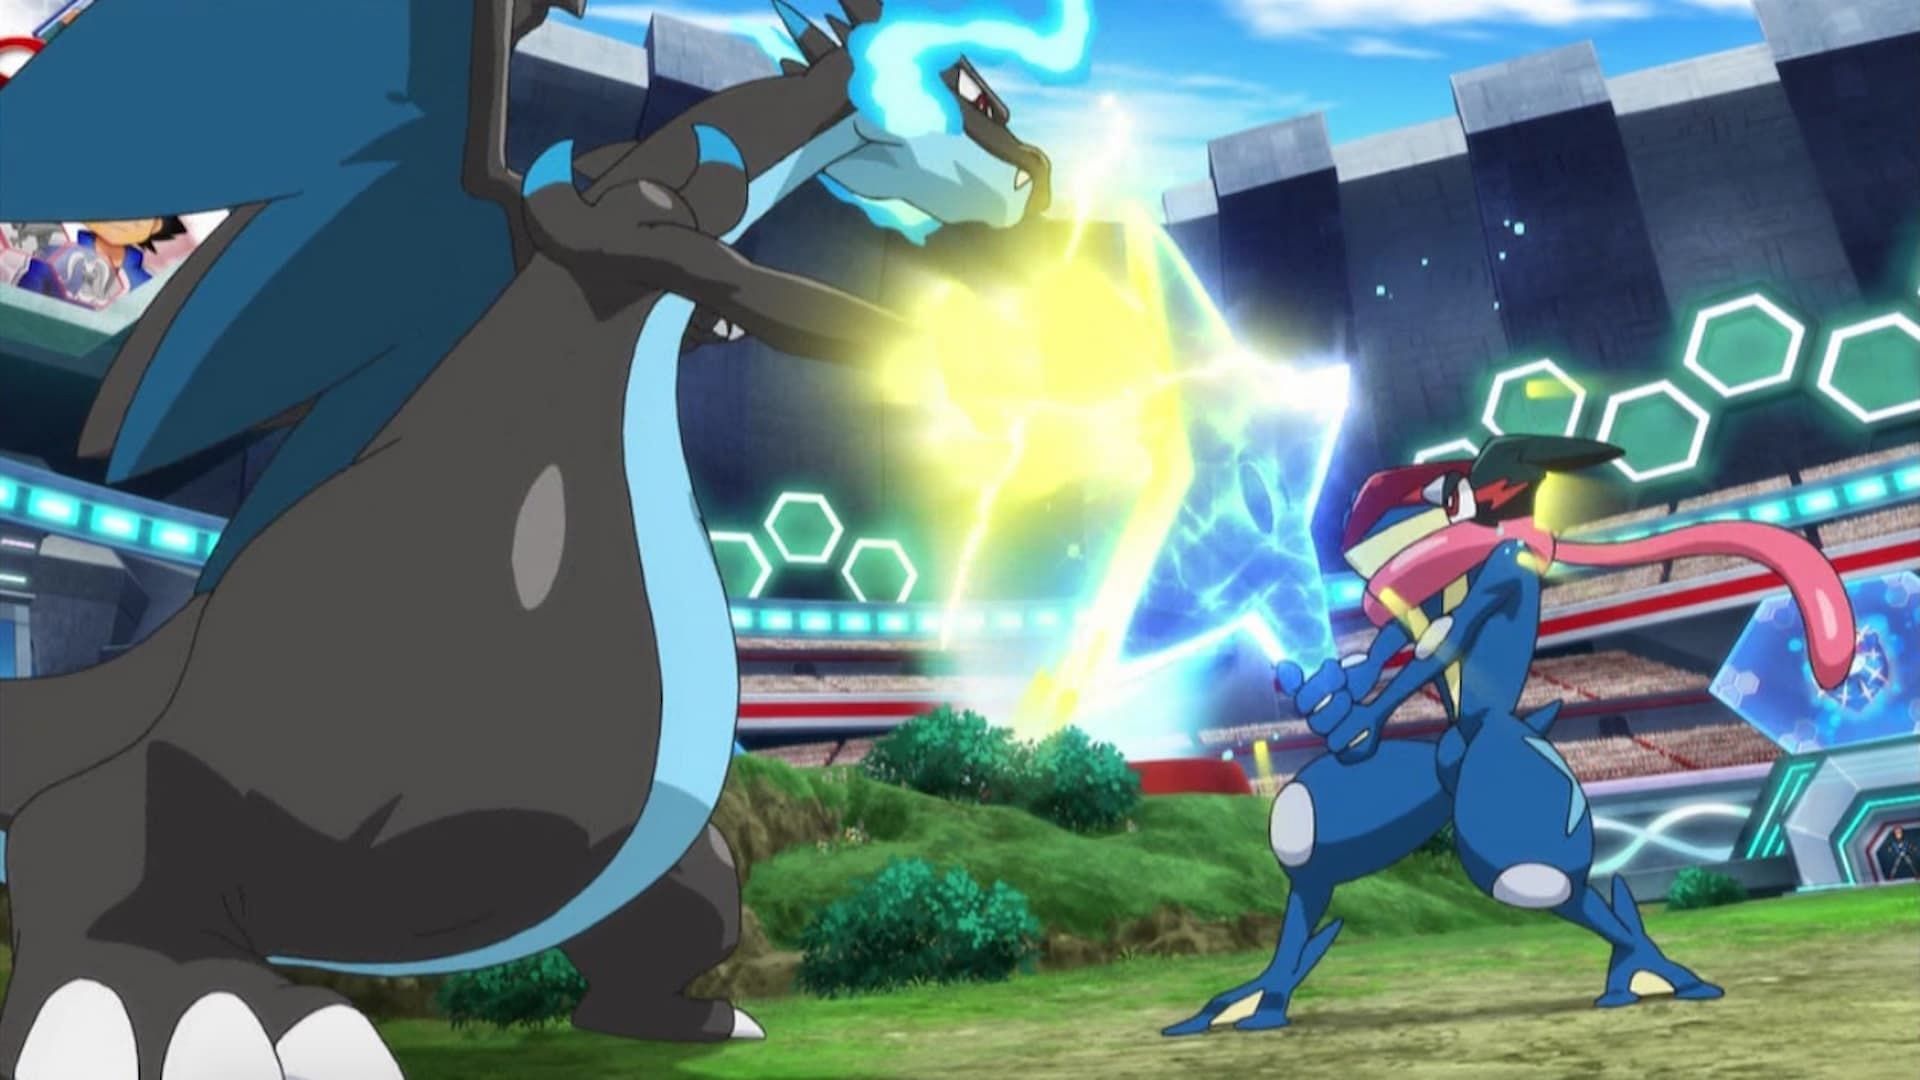 Ash-Greninja vs Mega Charizard X (Image via The Pokemon Company)